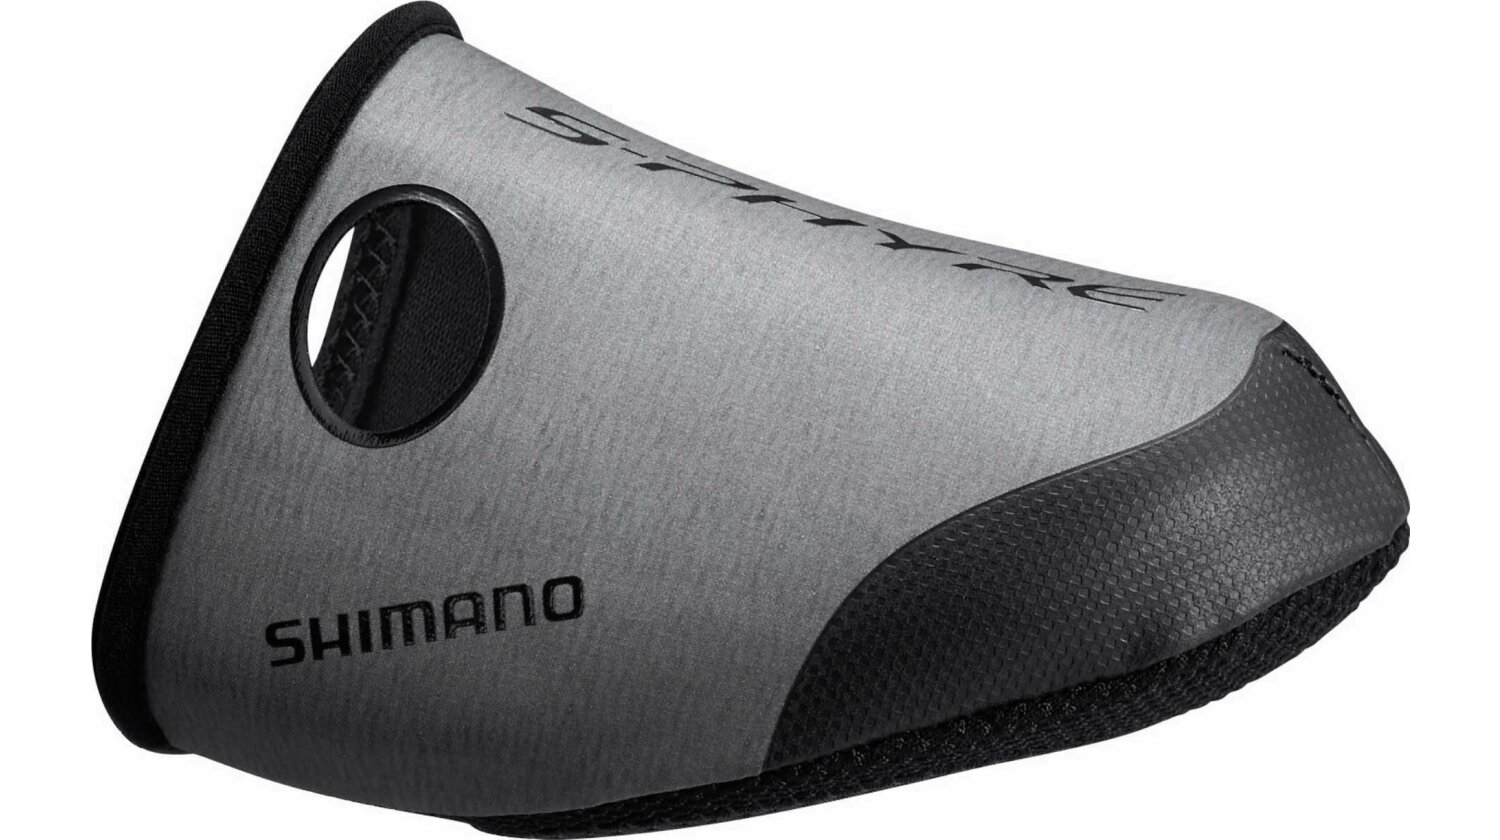 Shimano S-Phyre Toe Shoe Cover black